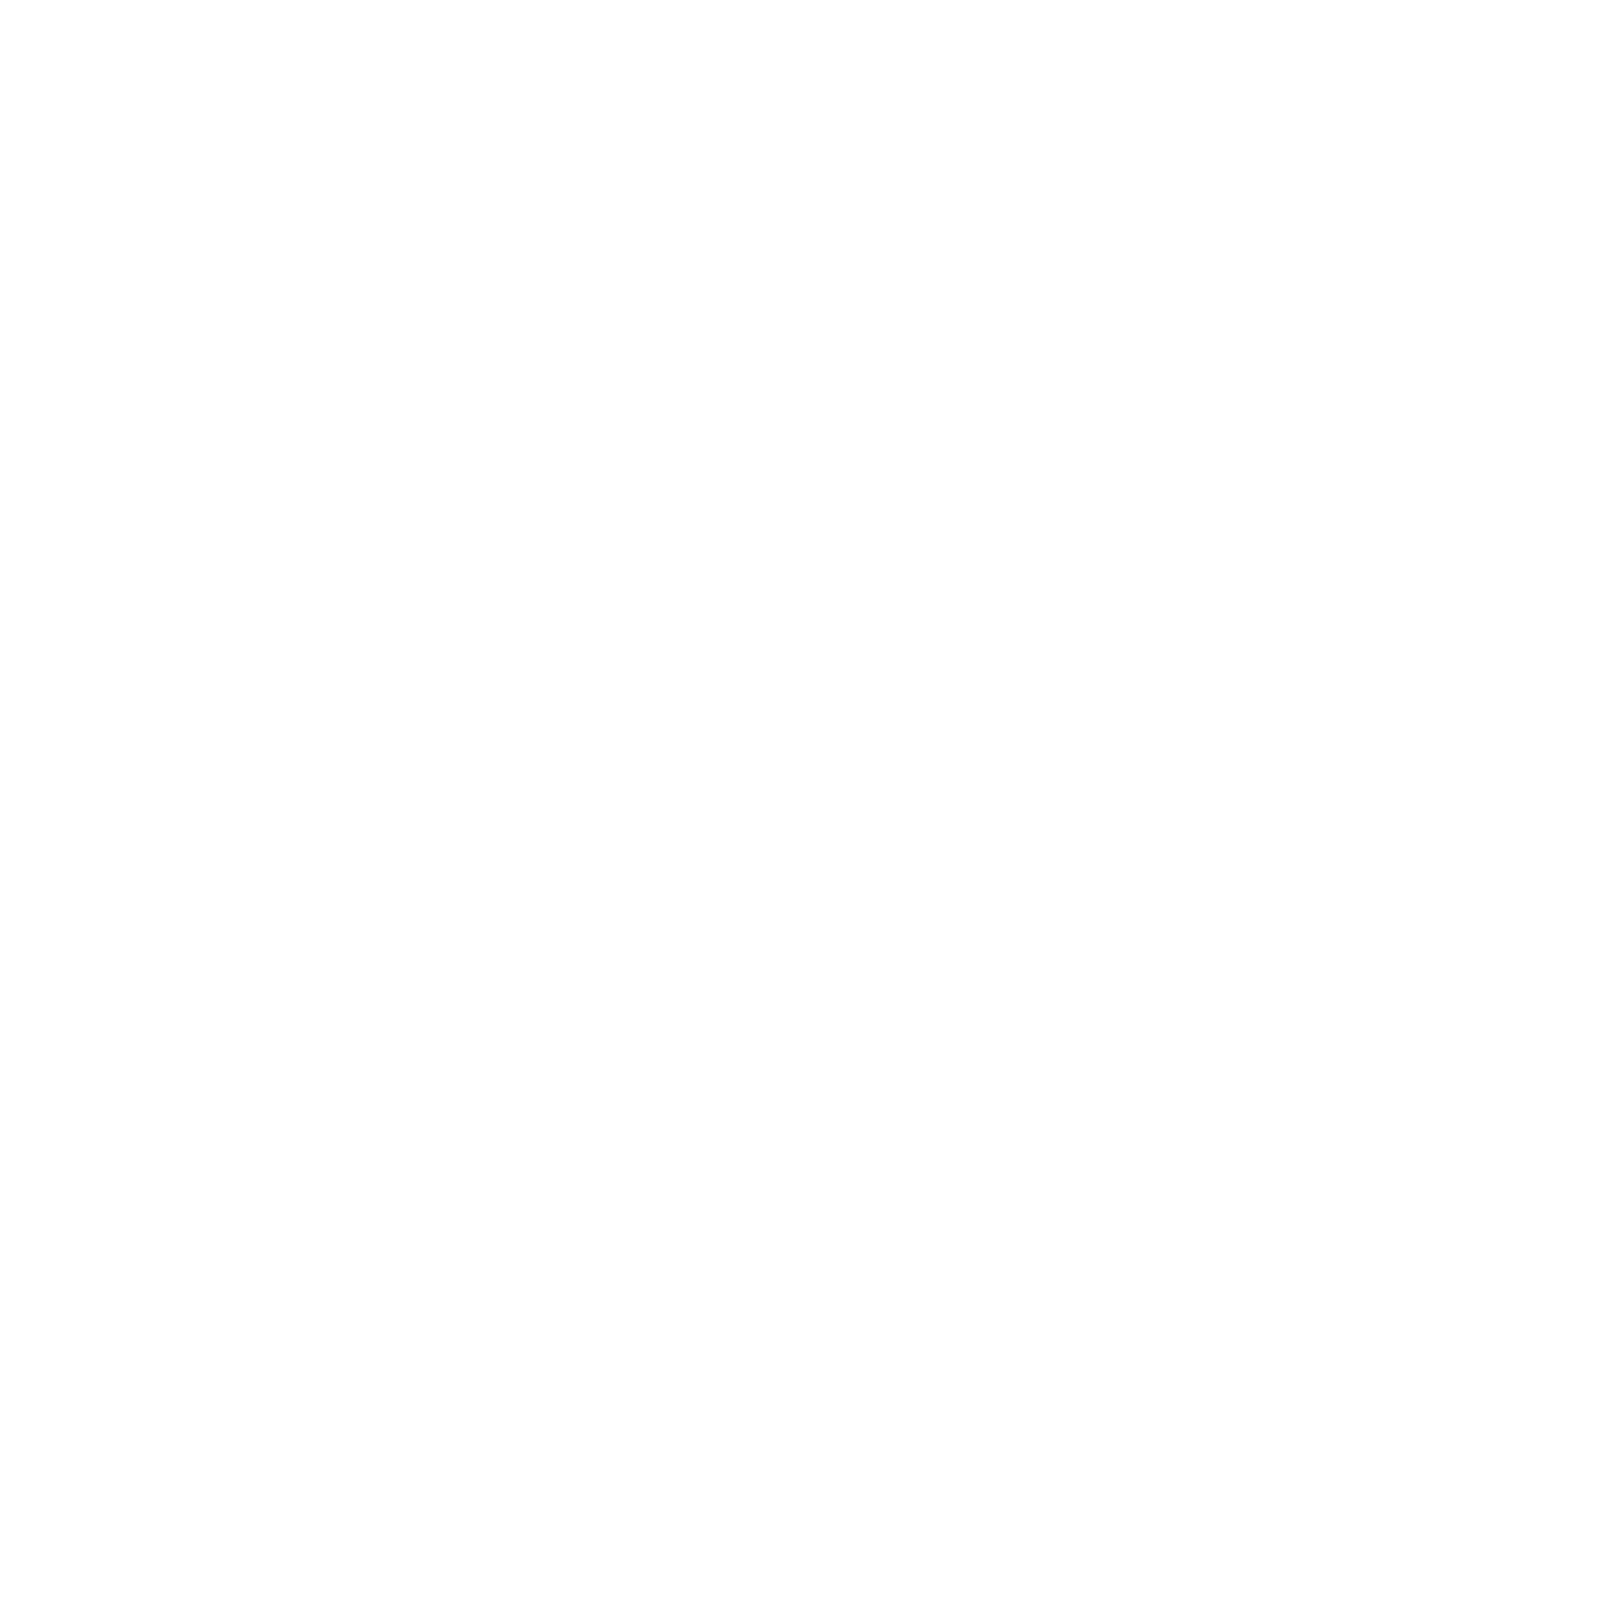 Top Bikes Store